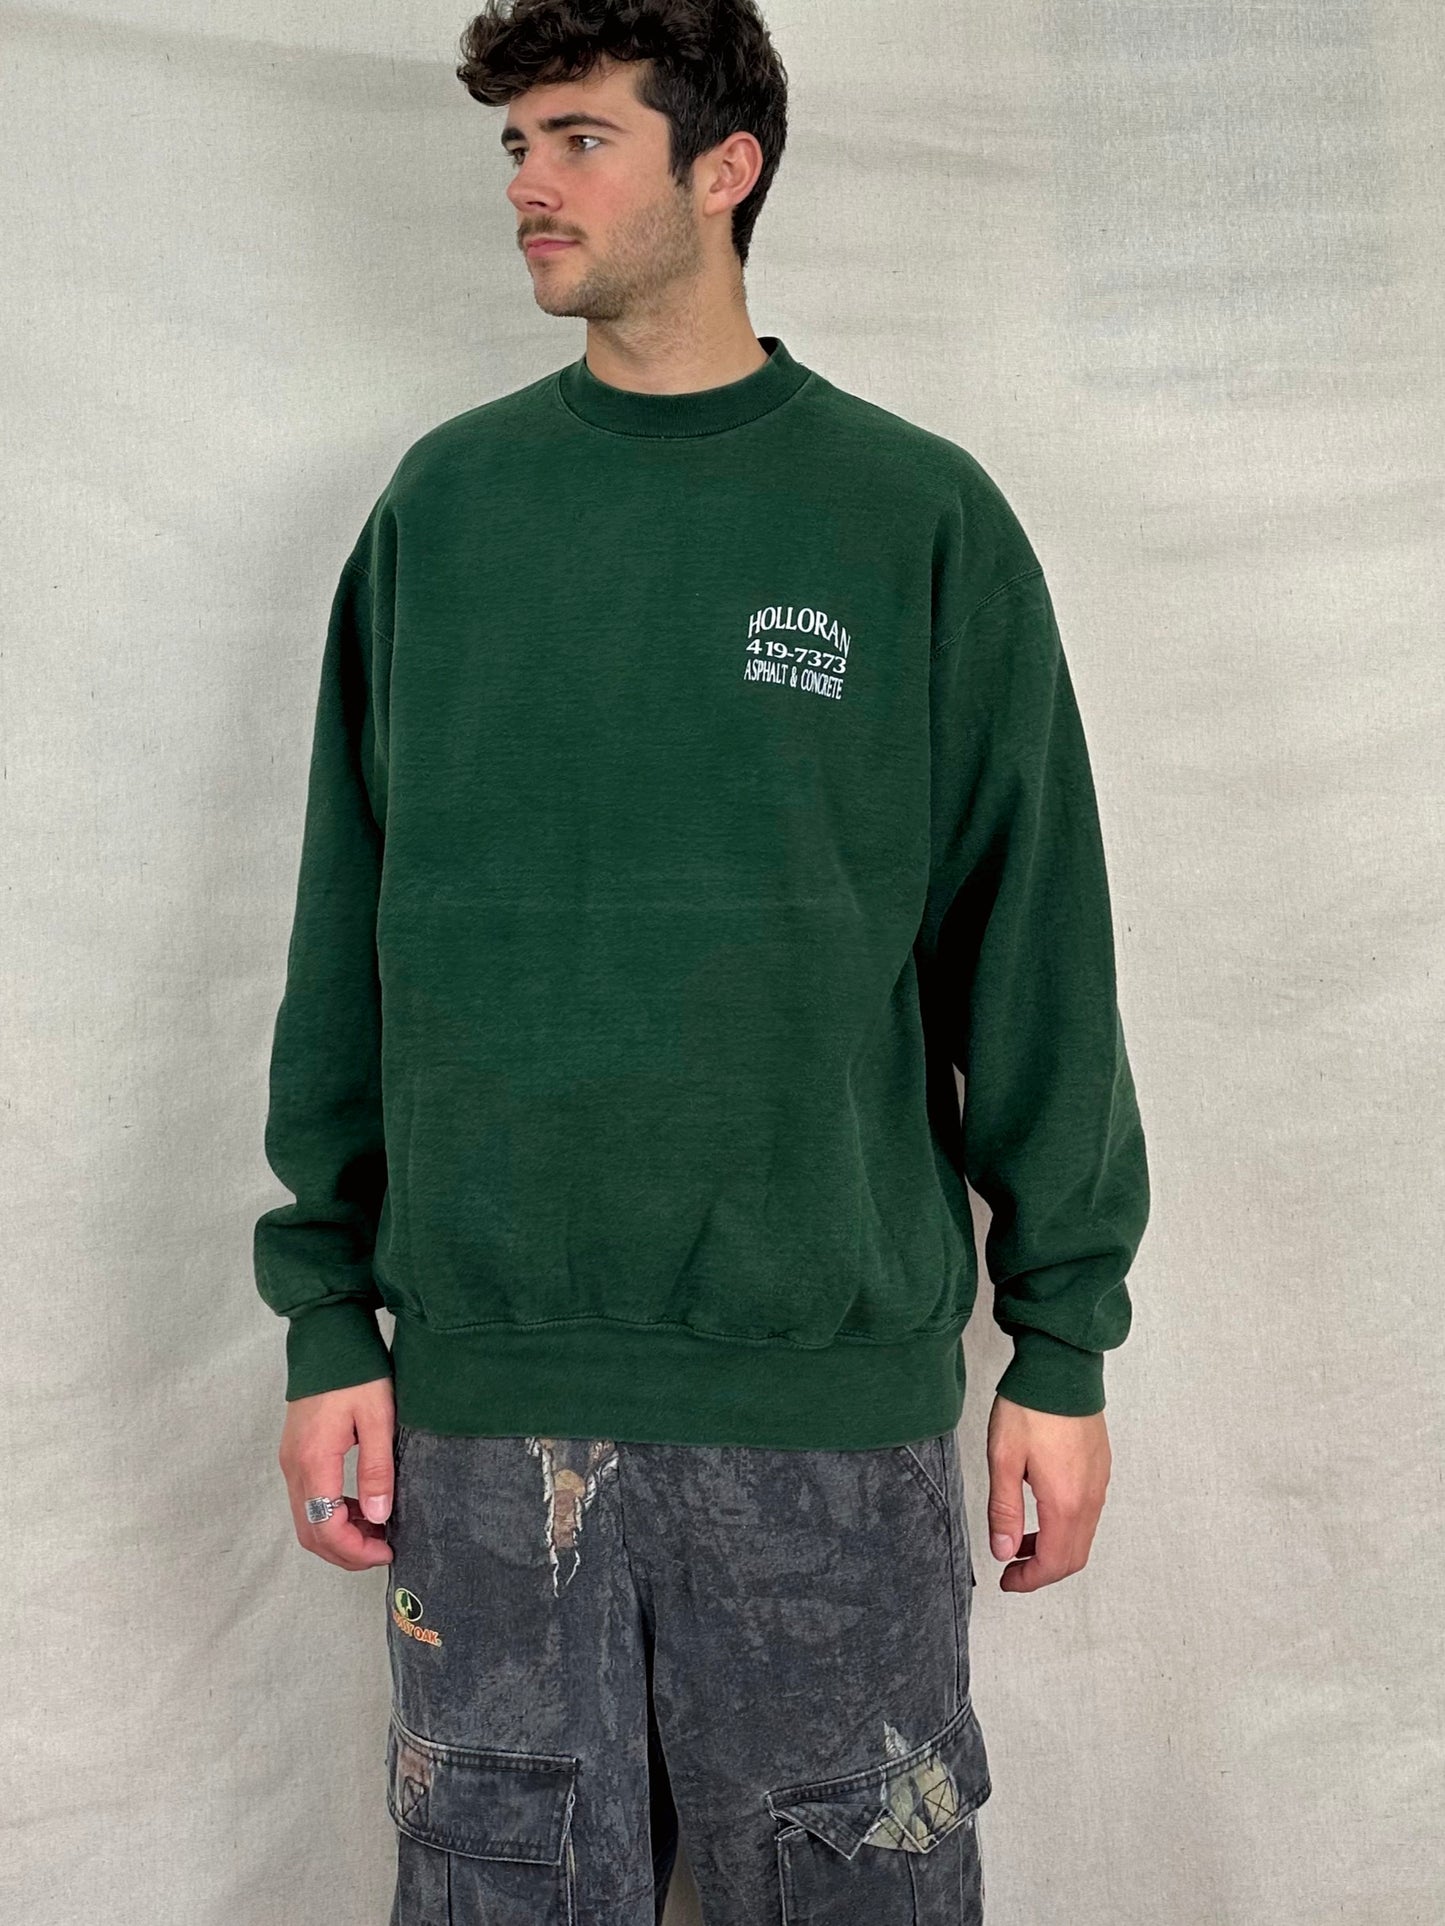 90's Holloran Asphalt & Concrete USA Made Vintage Sweatshirt Size XL